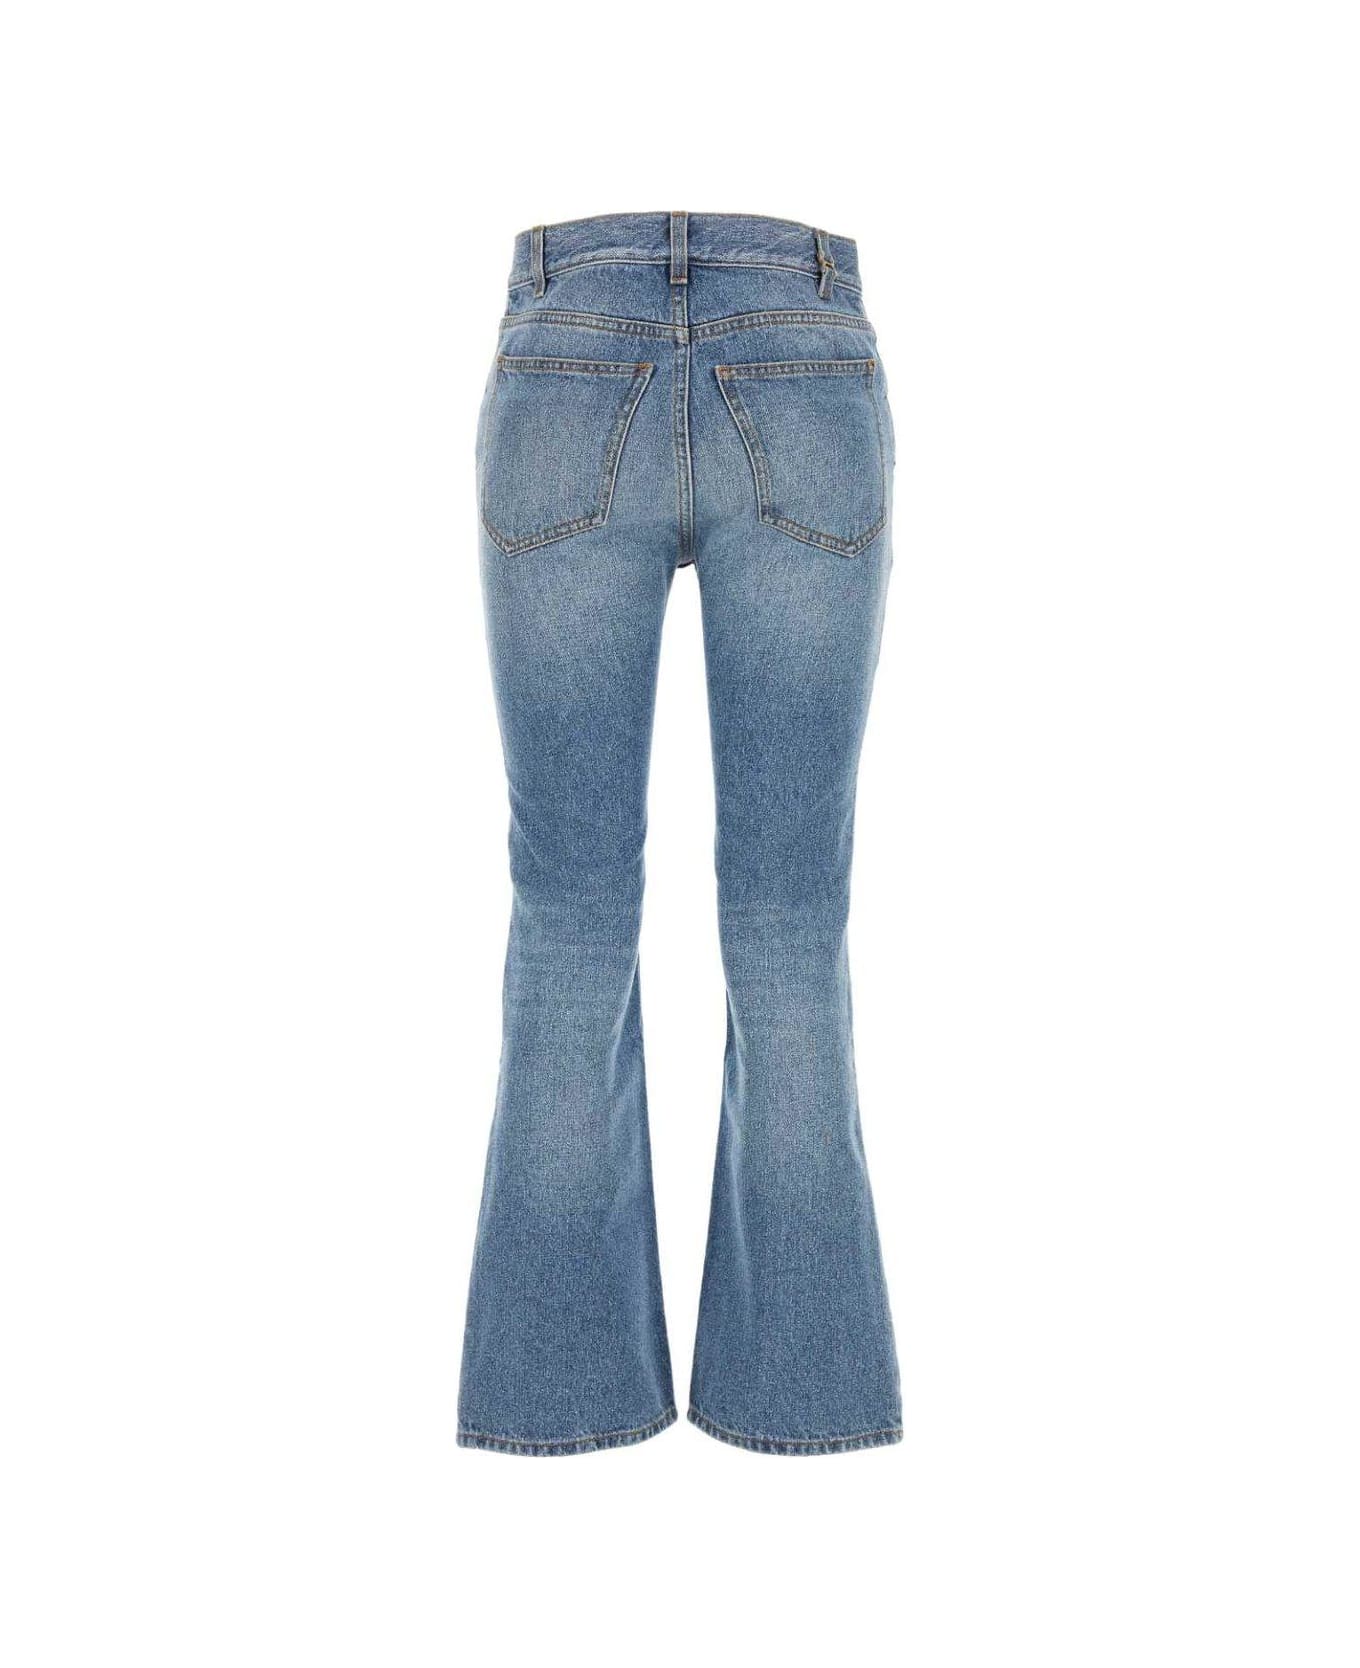 Chloé Cropped Bootcut Jeans - Denim